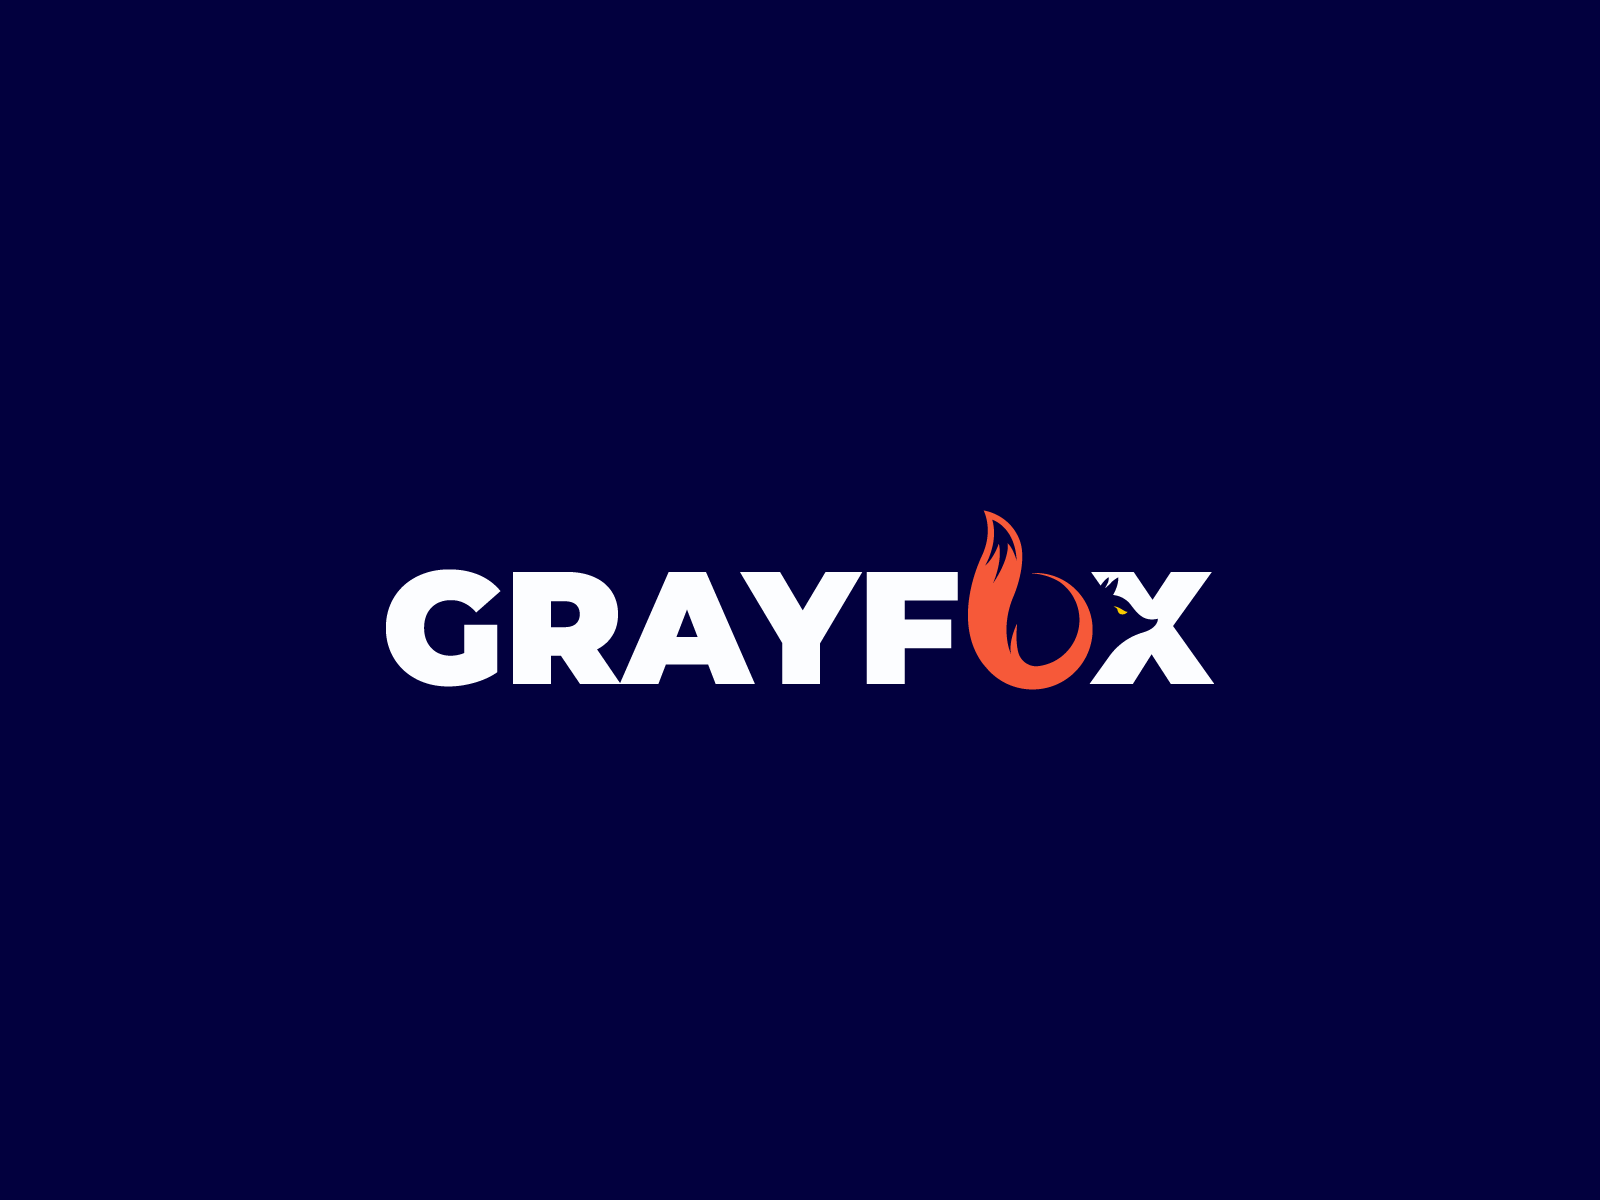 GRAYFOX Logo Design by Ali Abbas on Dribbble